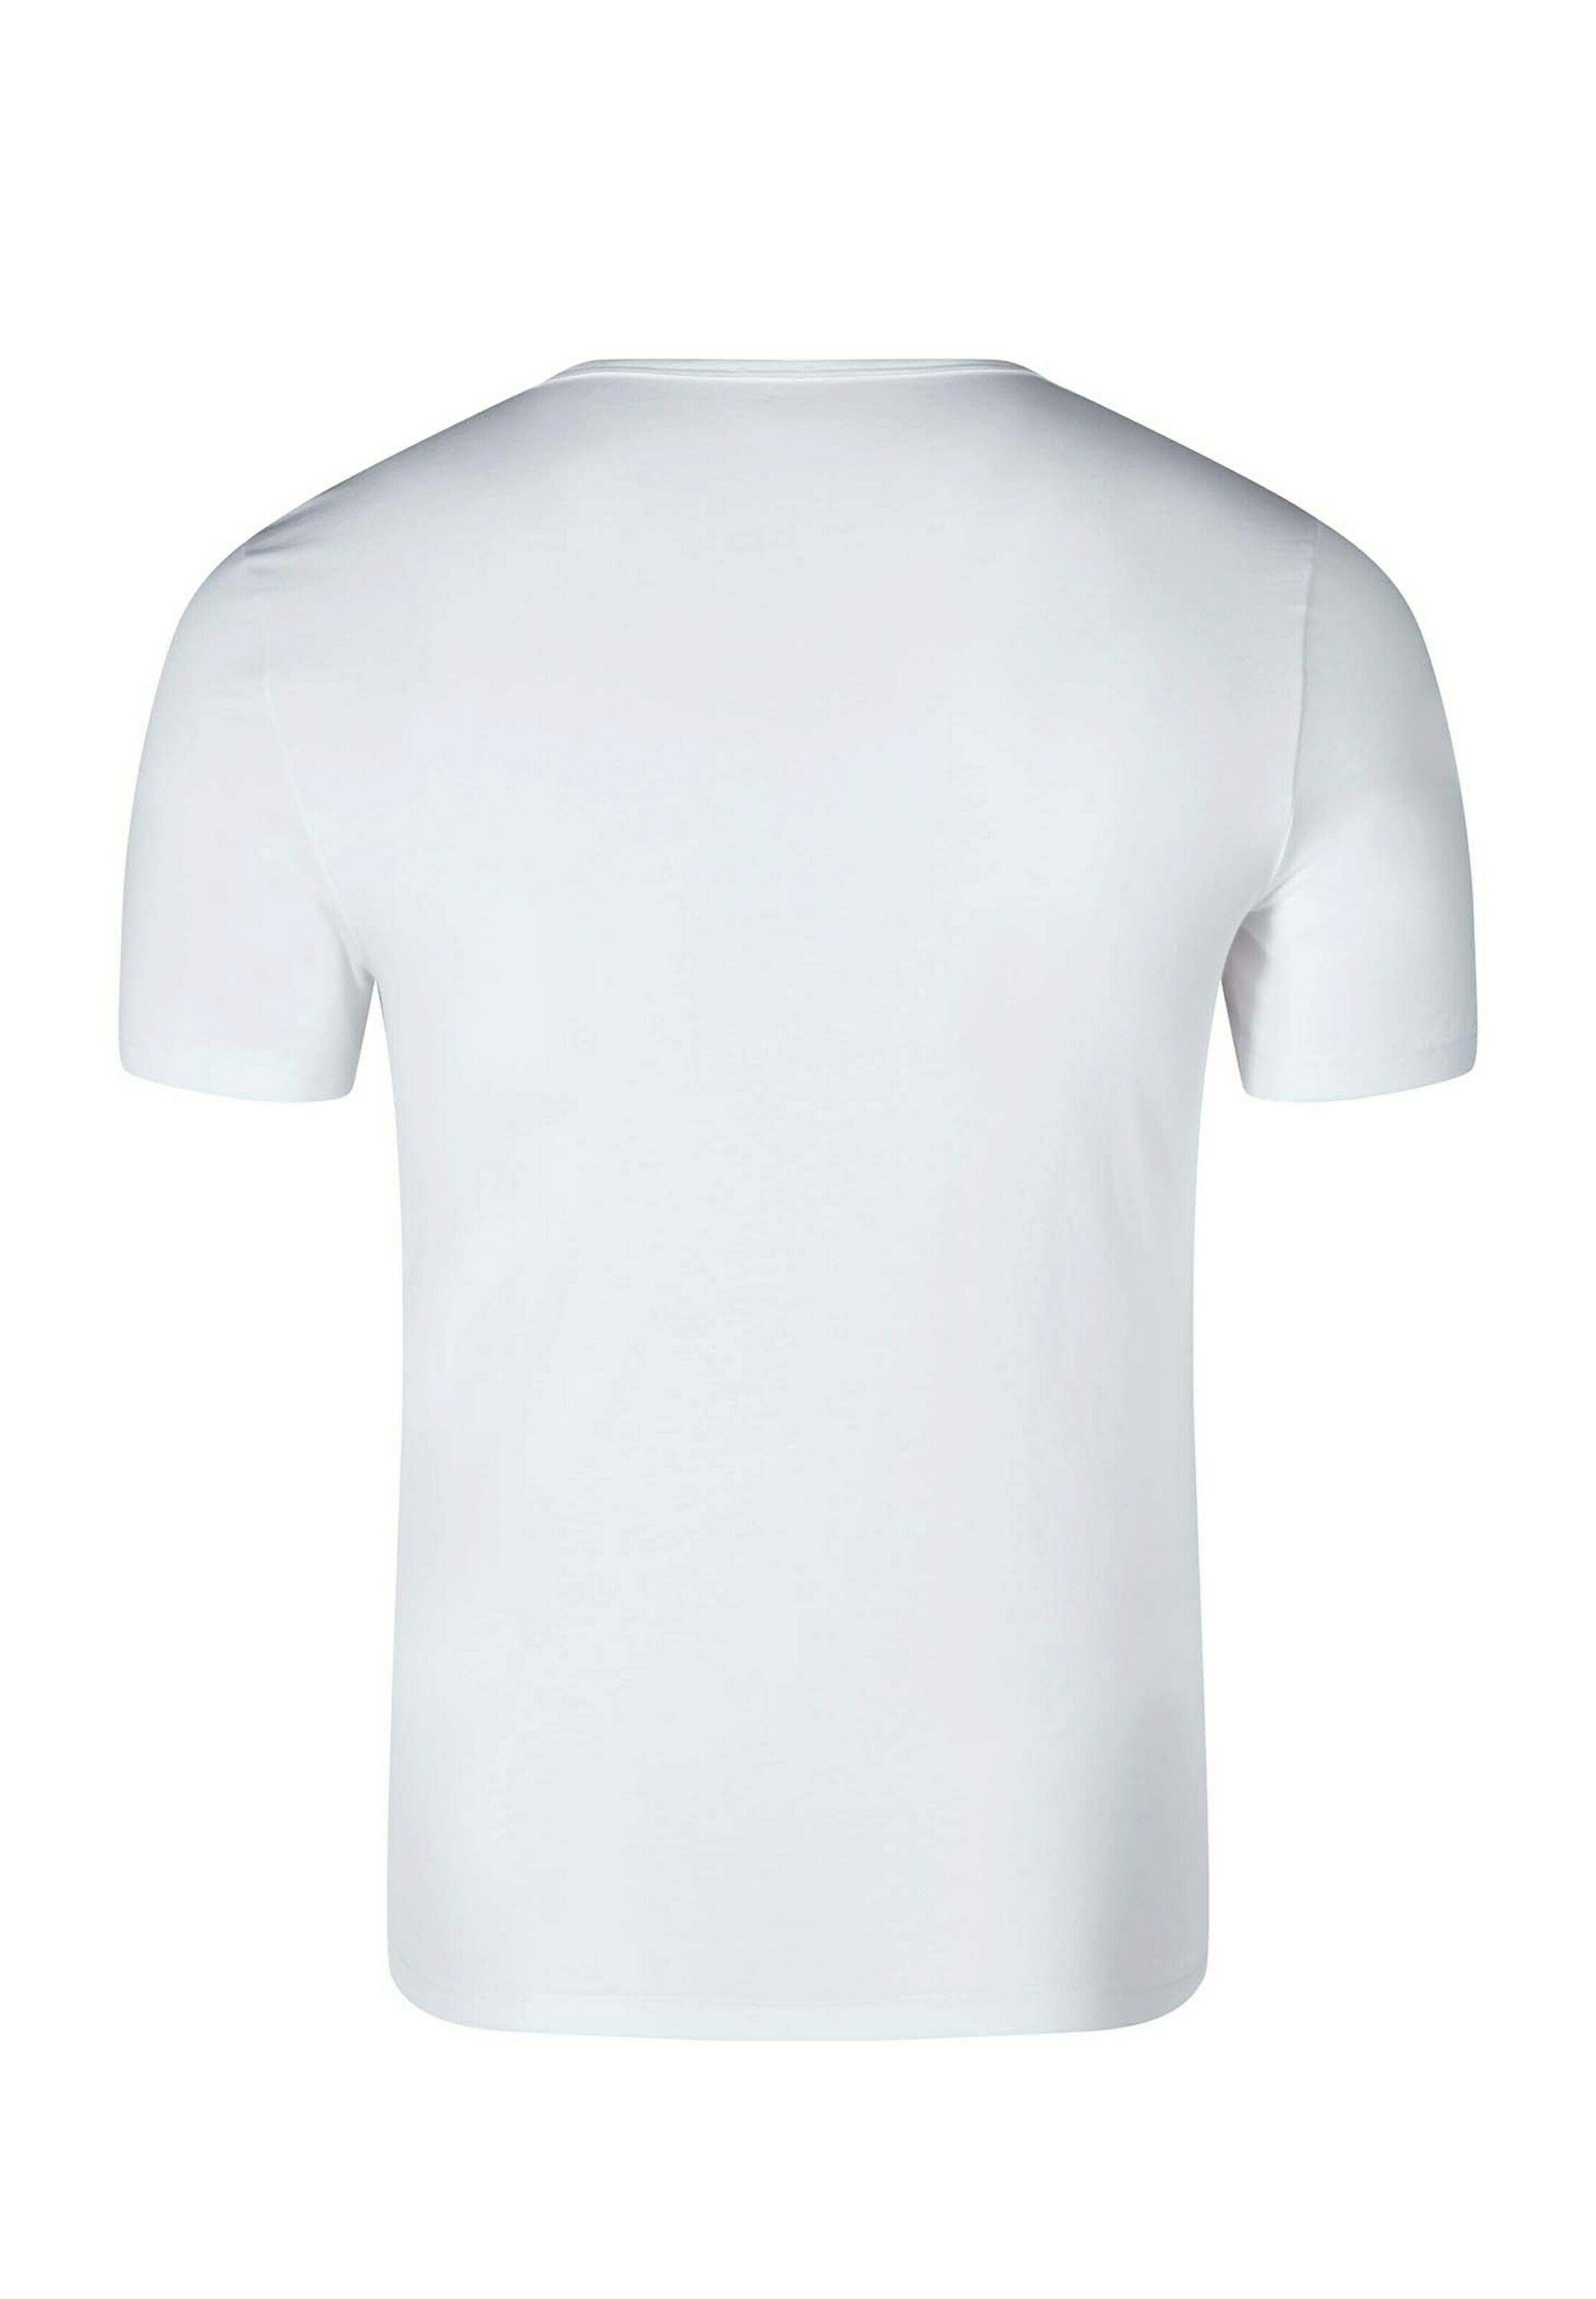 Skiny Unterhemd Weiß (2-St)